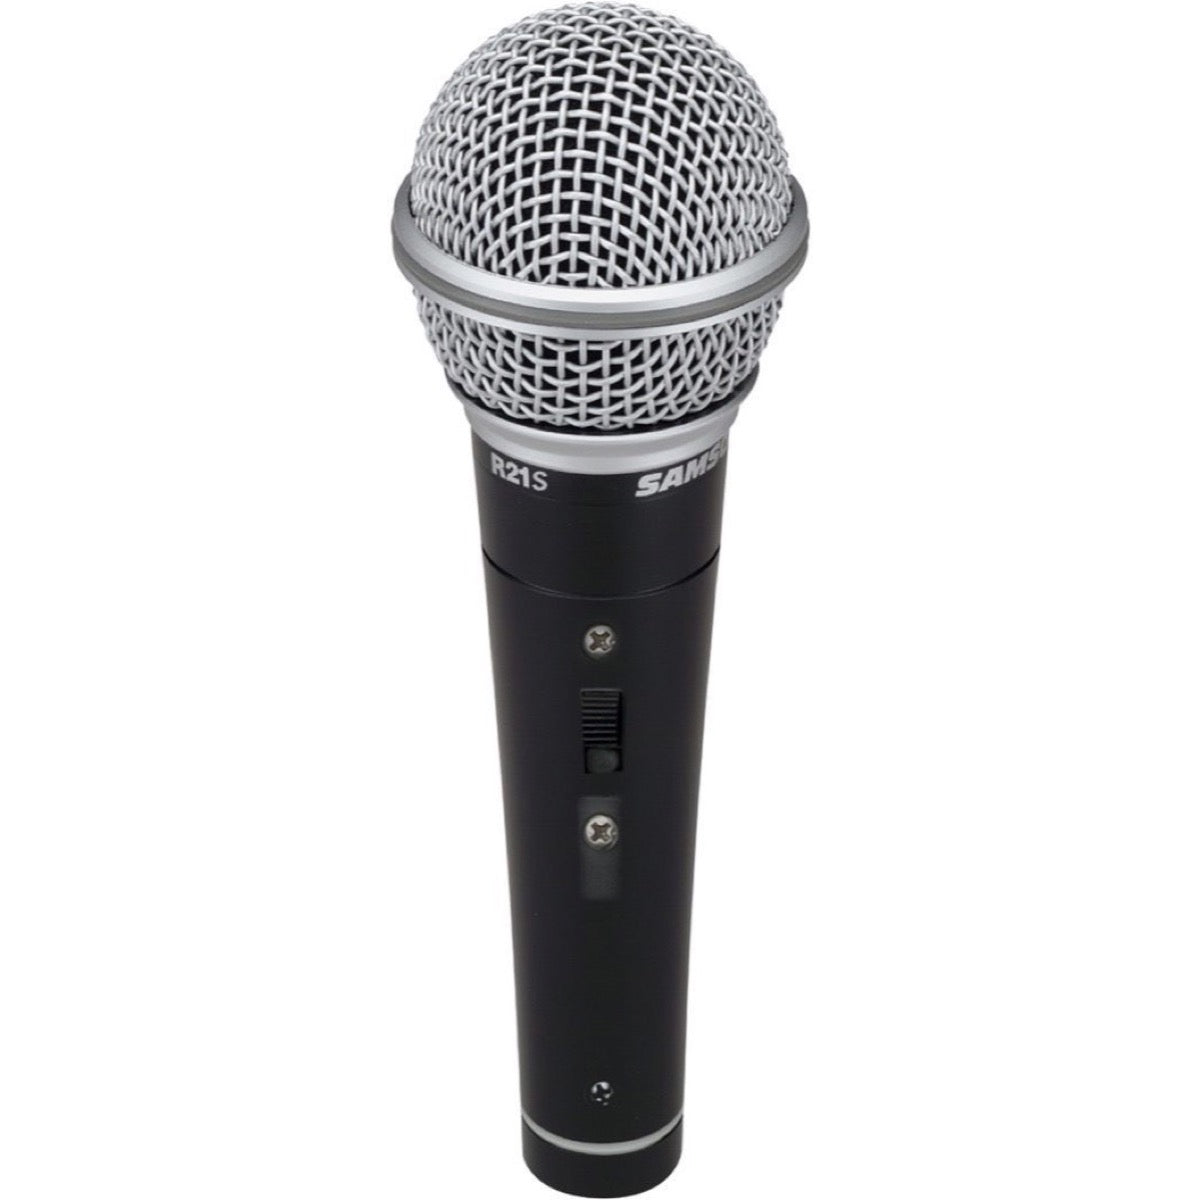 Samson R21S Dynamic Cardioid Handheld Microphone